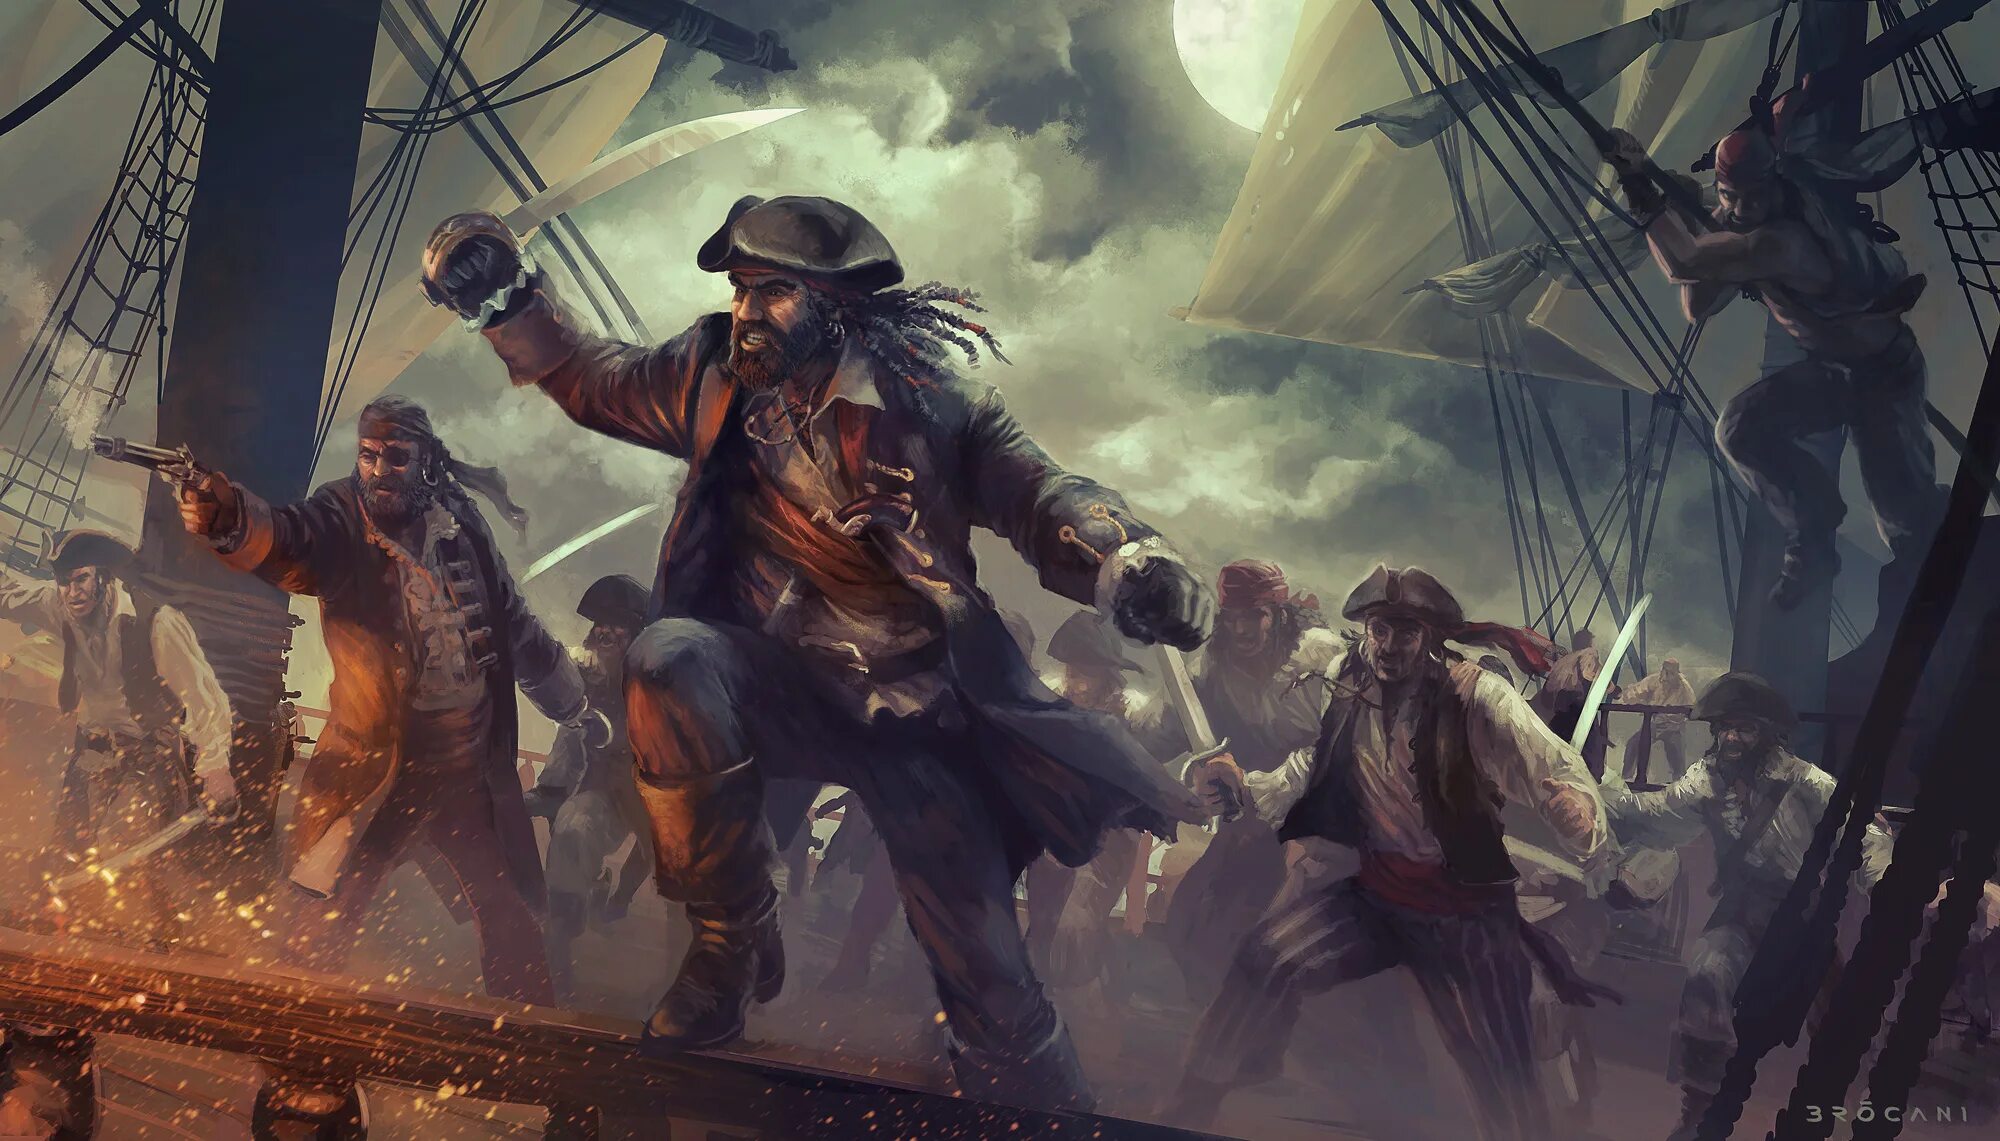 Команды капитана корабля. Флибустьеры 17 века. Пираты Карибского моря абордаж. Капитан Блад абордаж.